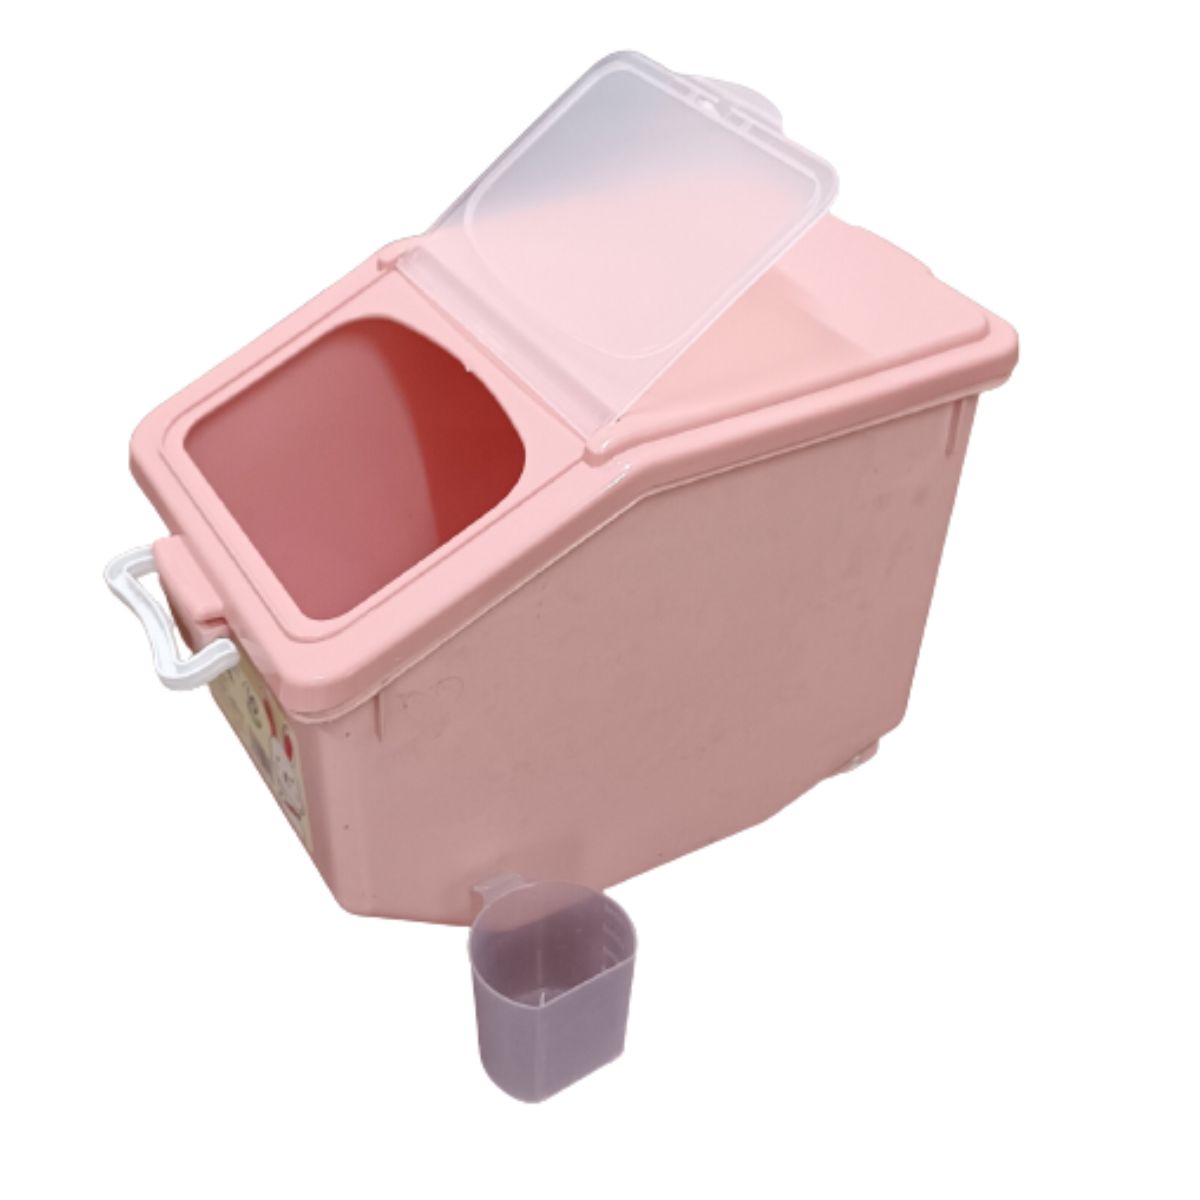 Plastic Food/Grain Storage Container - 10Kg Capacity - Pink